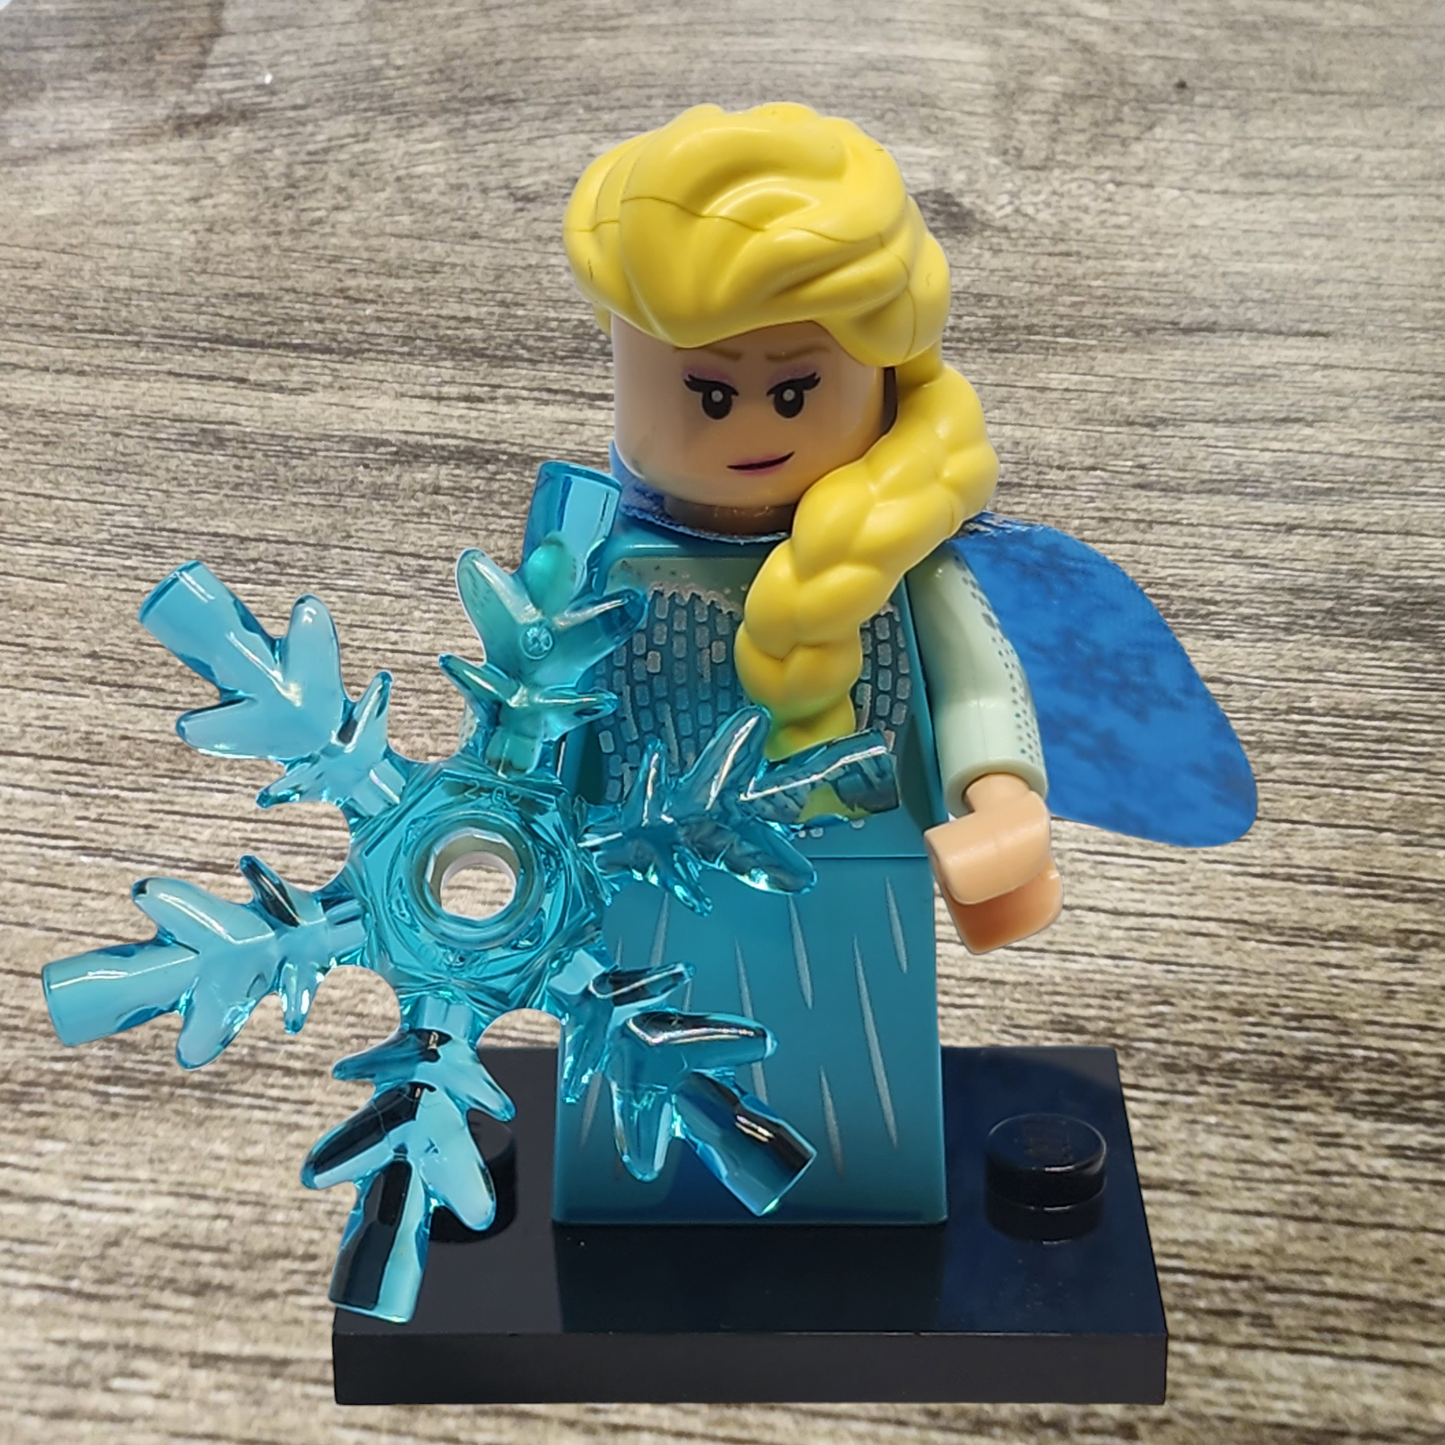 Lego Elsa Disney Minifigure Series 2 dis032 Frozen